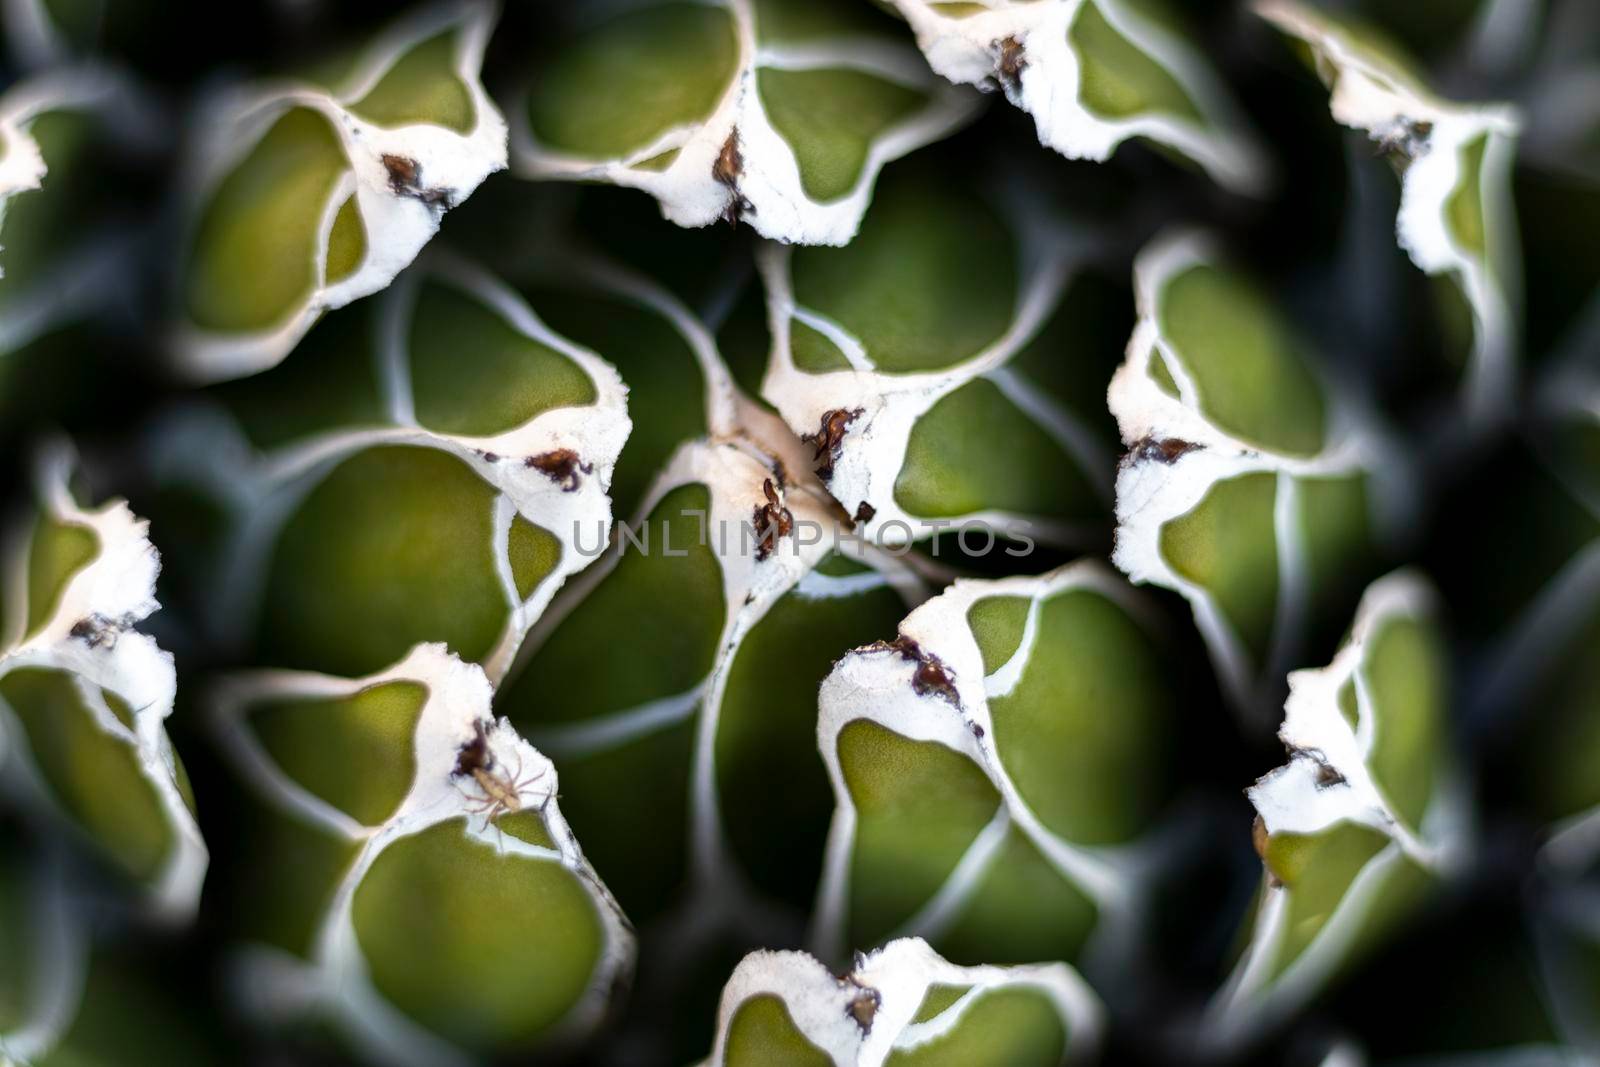 Closeup of a Royal agave plant by Bilalphotos